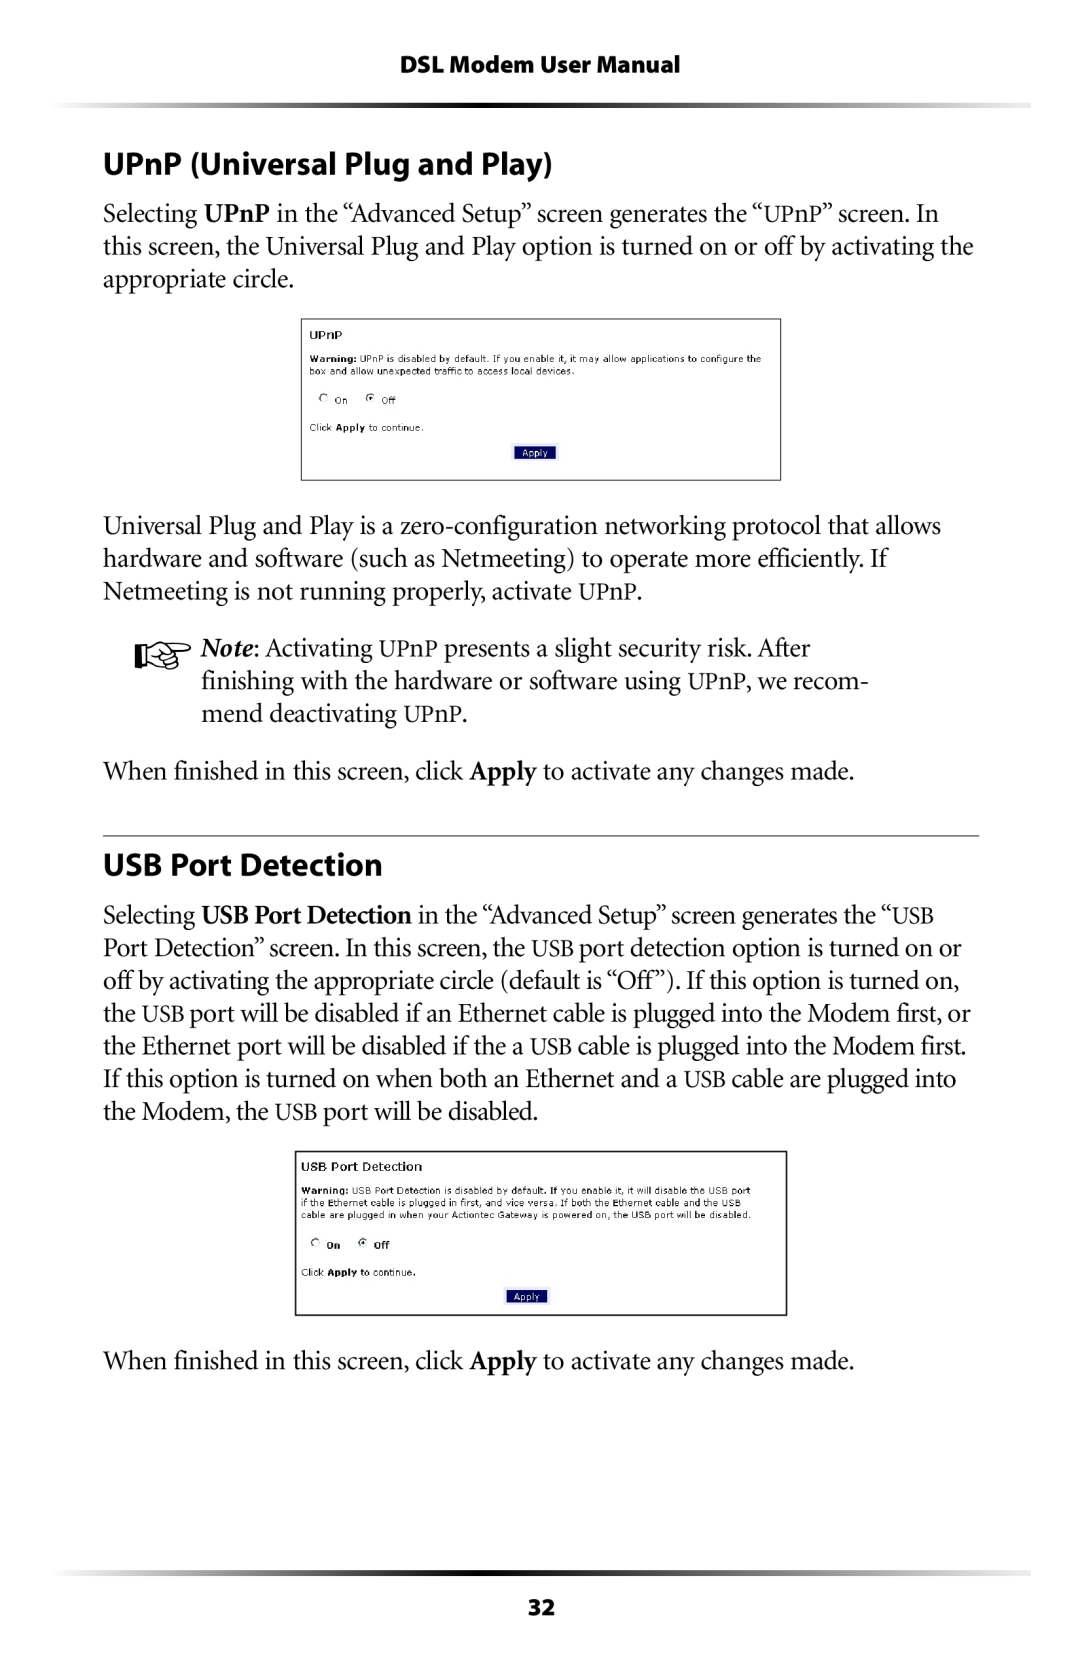 Verizon GT701C user manual UPnP Universal Plug and Play, USB Port Detection 